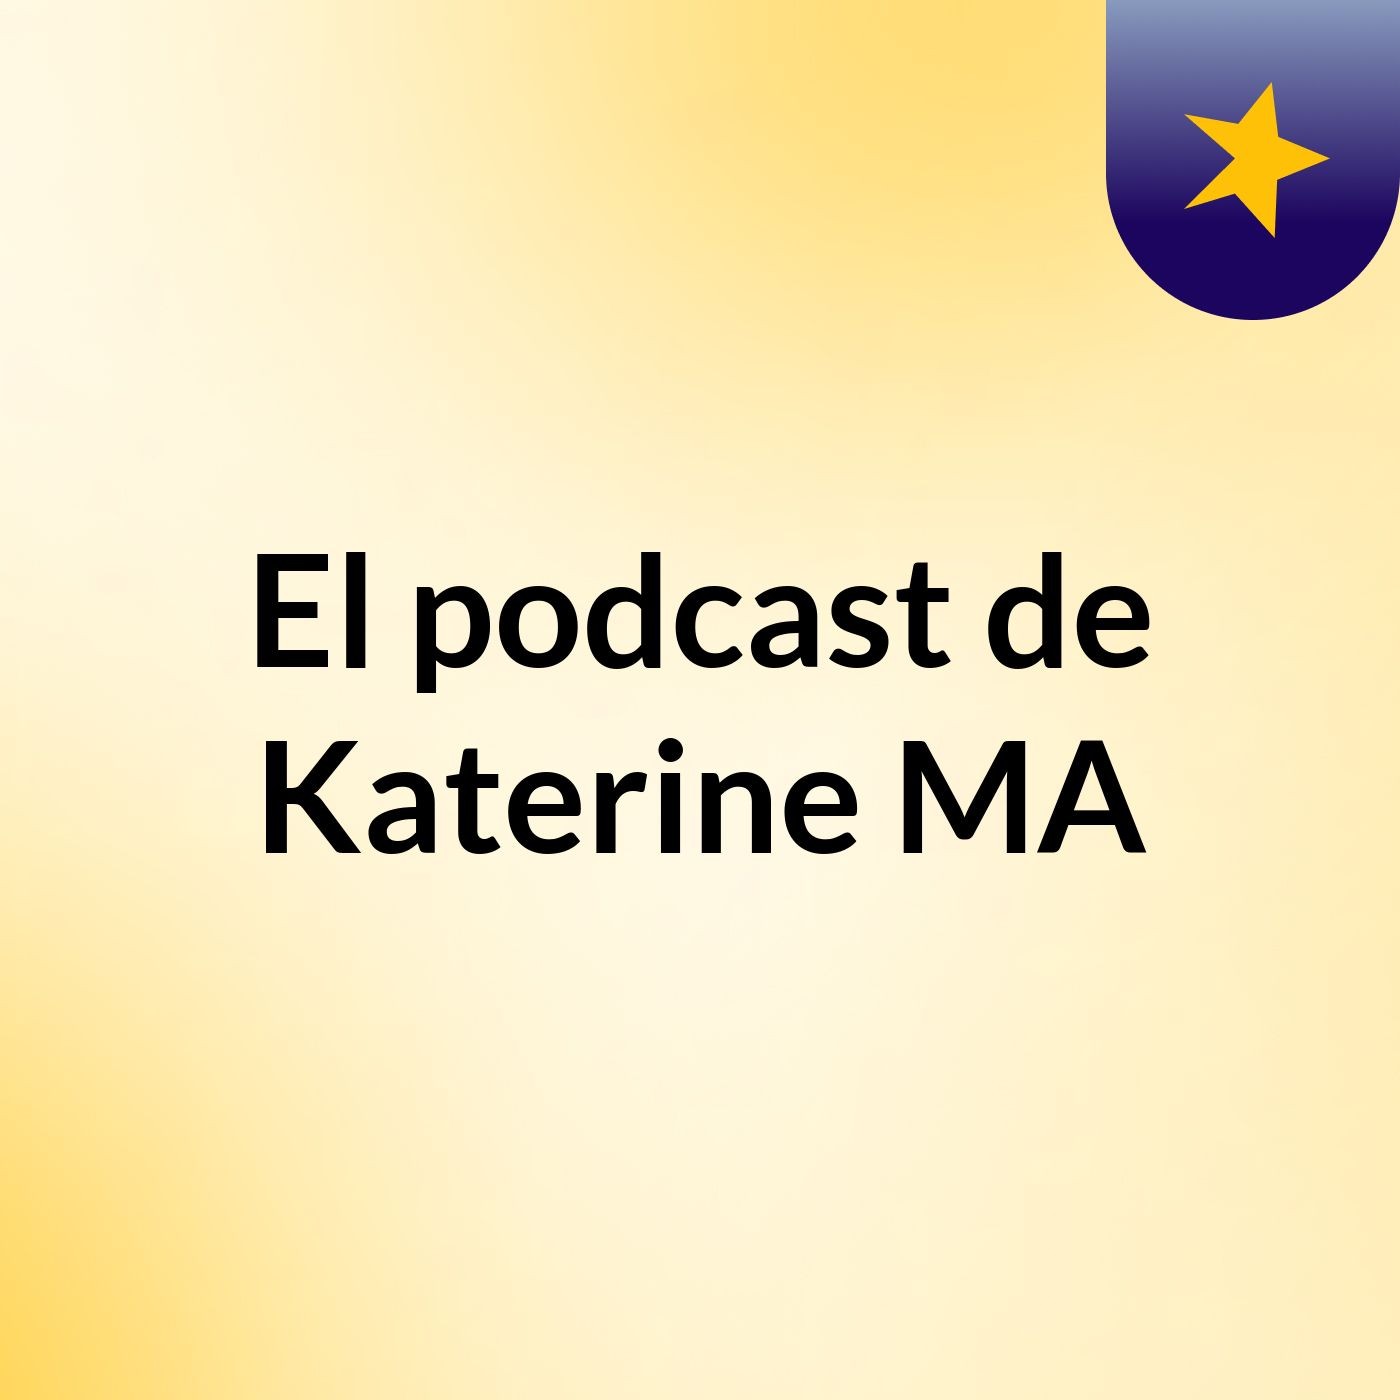 El podcast de Katerine MA